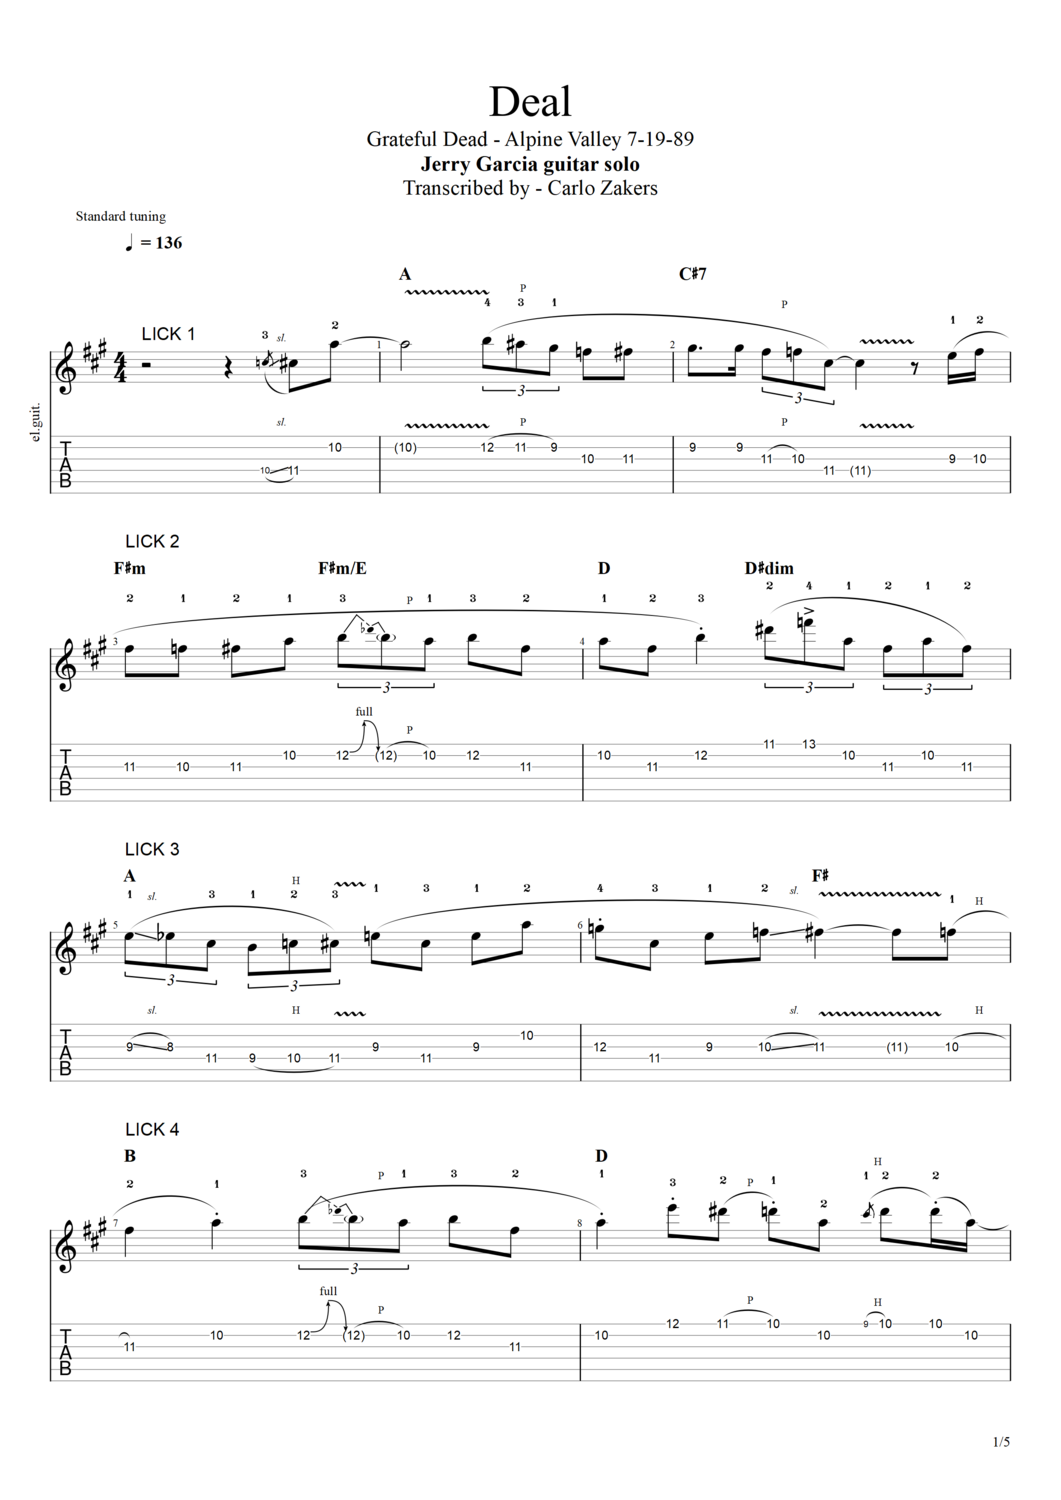 TAB - "Deal" - Jerry Garcia guitar solo - Alpine Valley 7-19-89